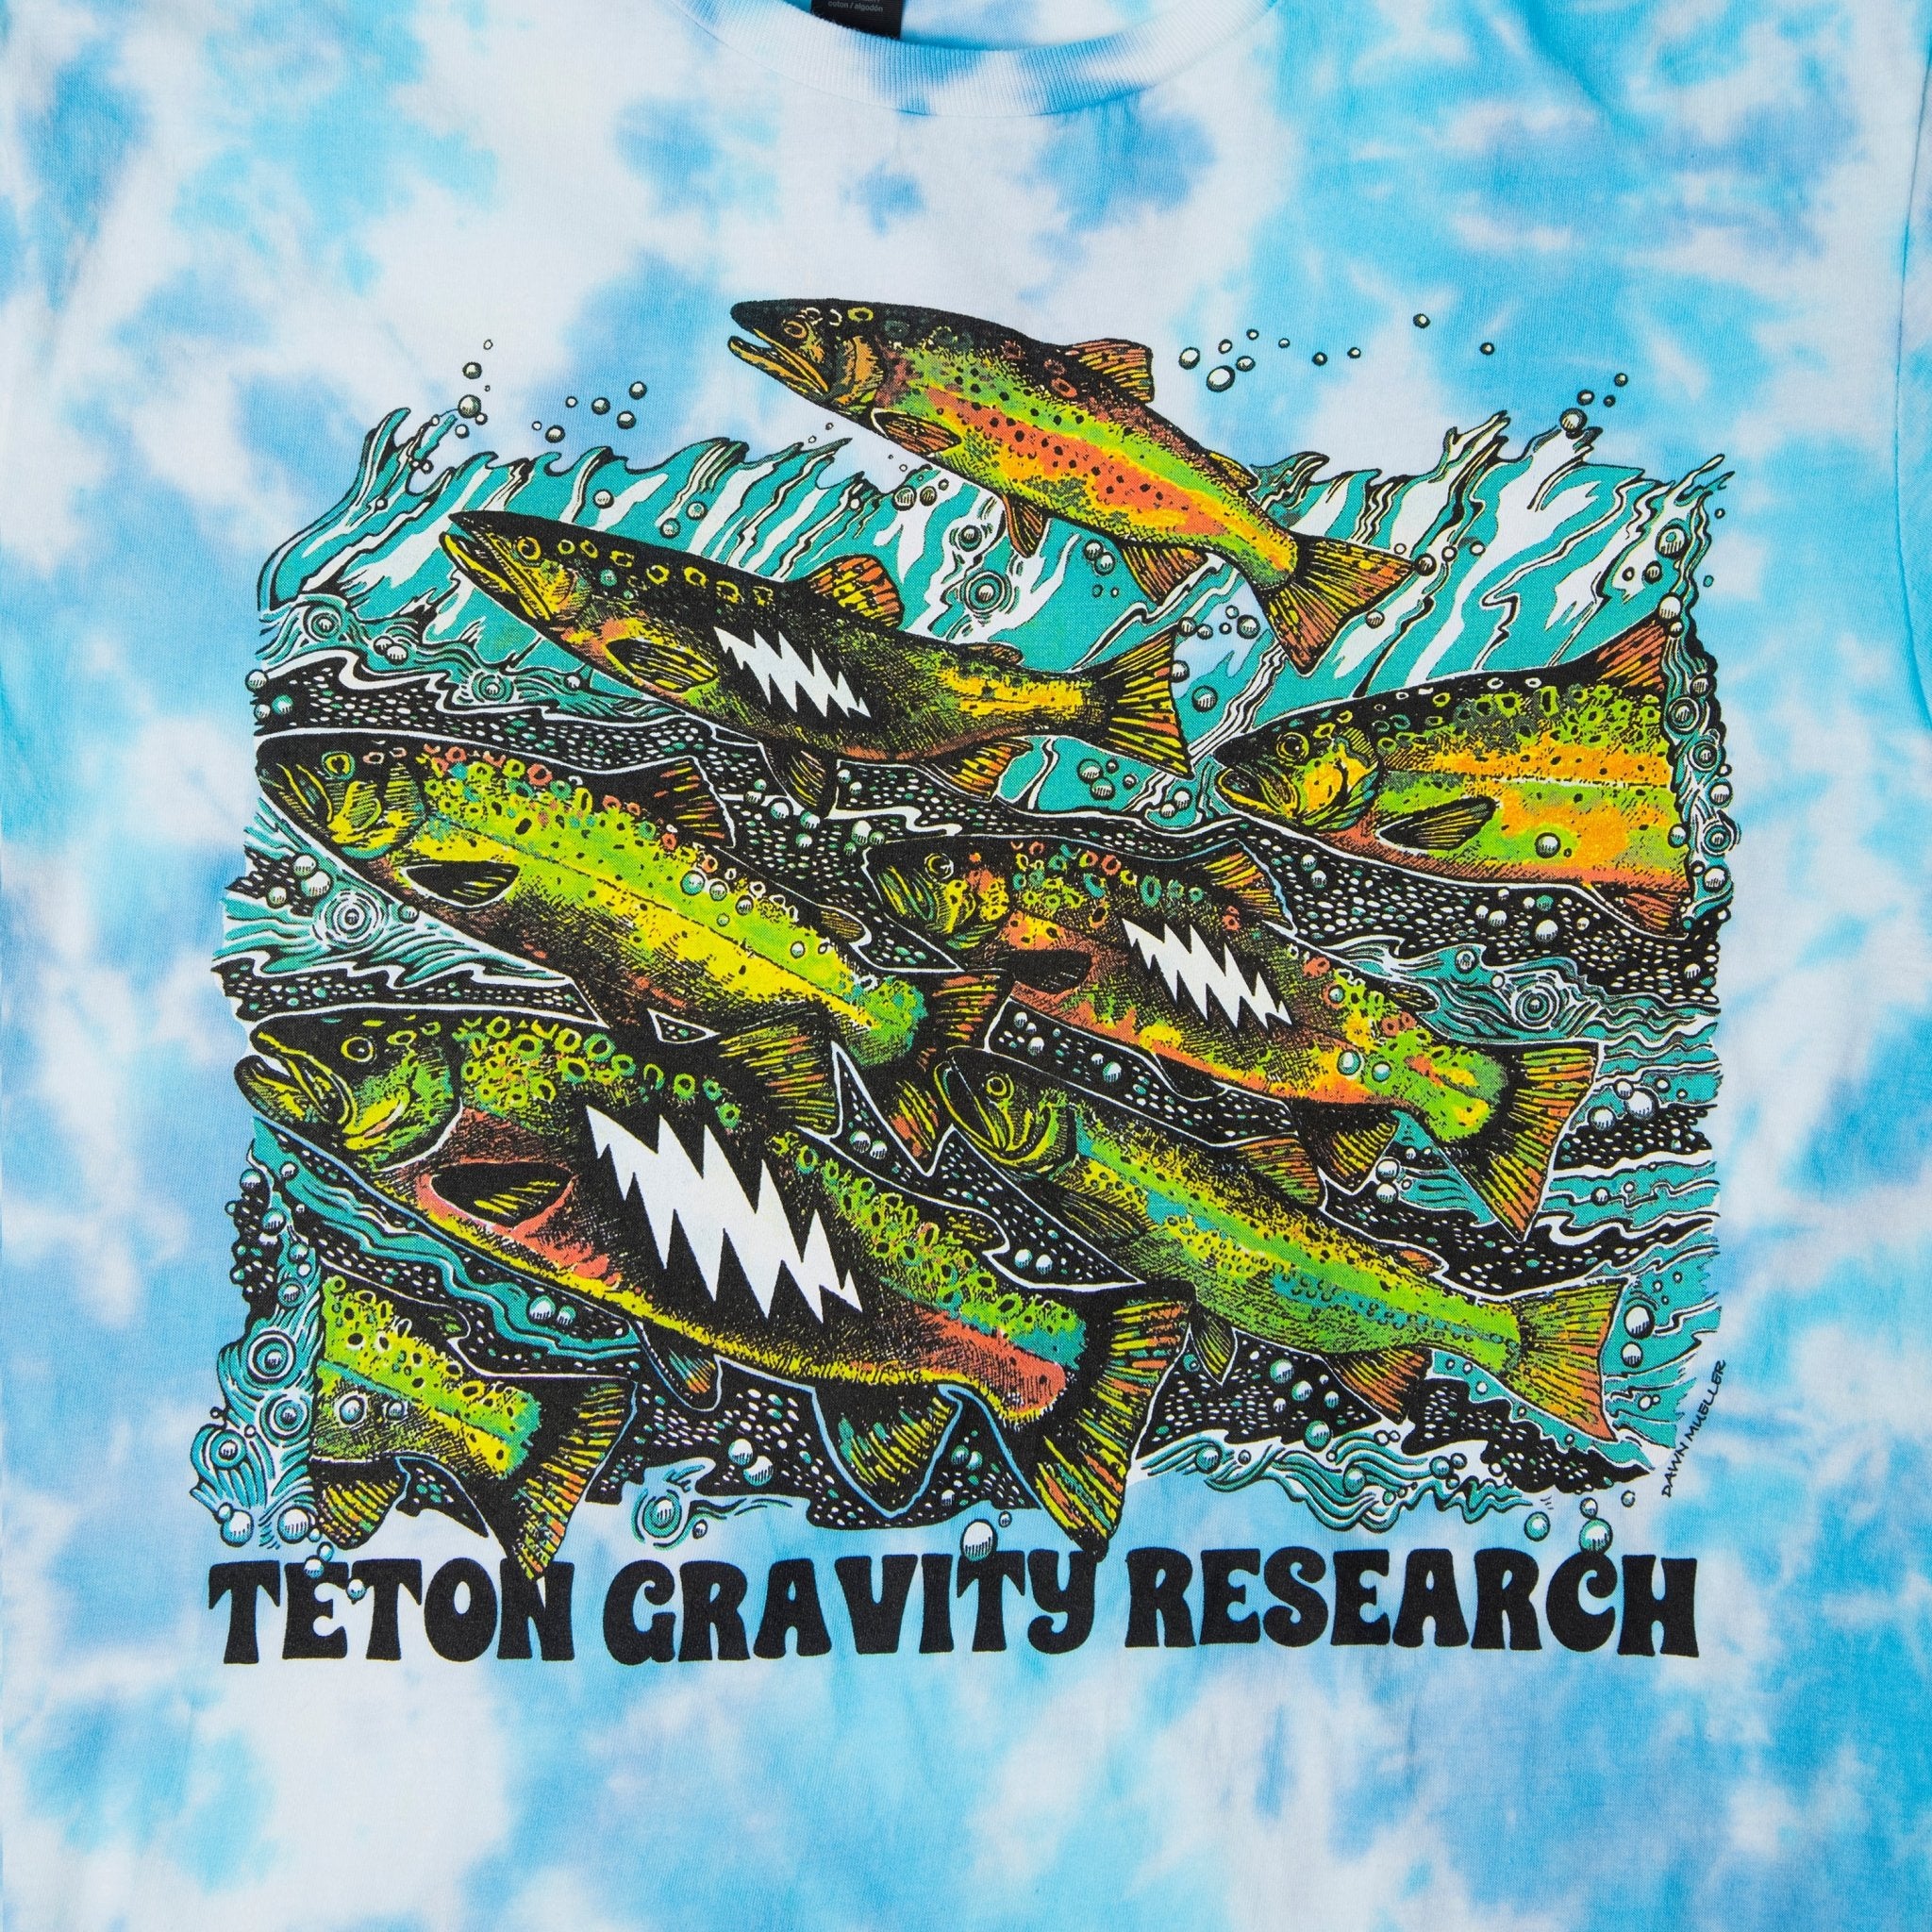 Grateful Dead x TGR “Fish Are Rising Up Like Birds” T-Shirt - Teton Gravity Research